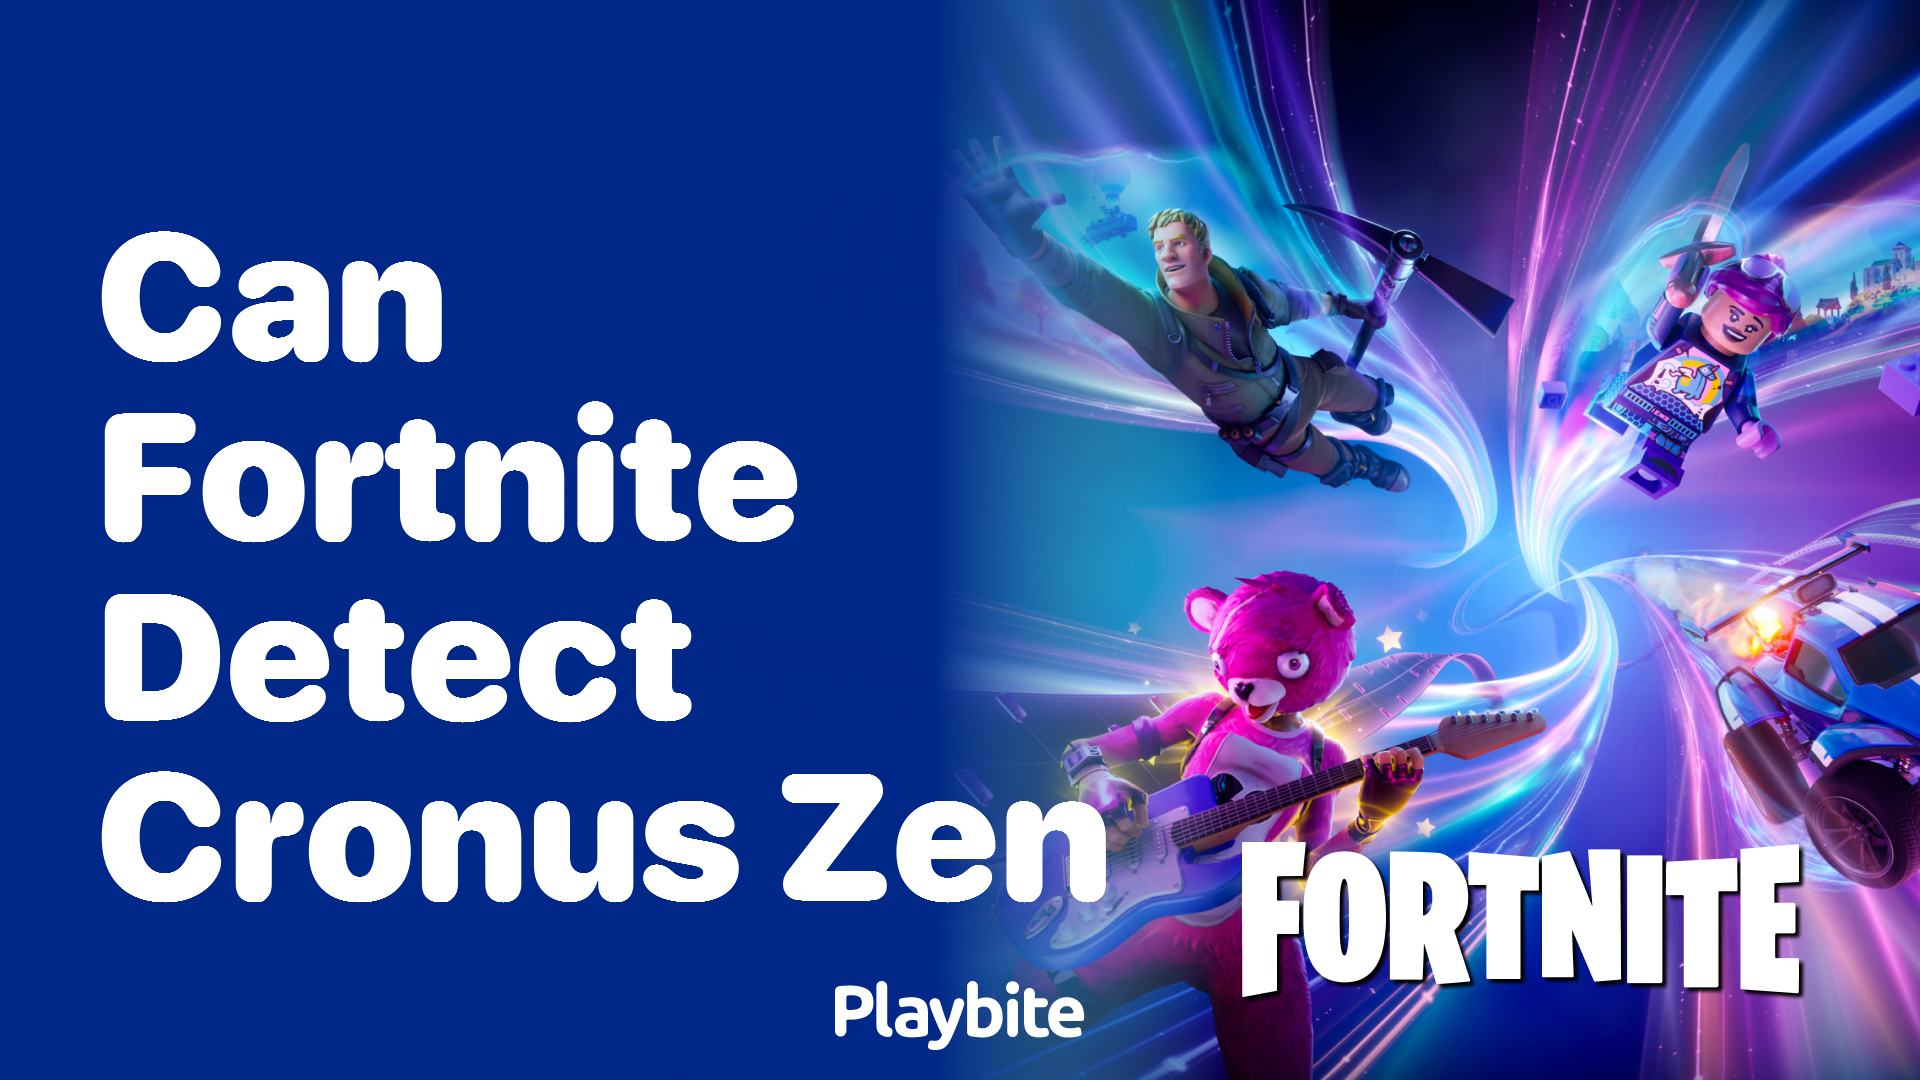 Can Fortnite Detect Cronus Zen? - Playbite